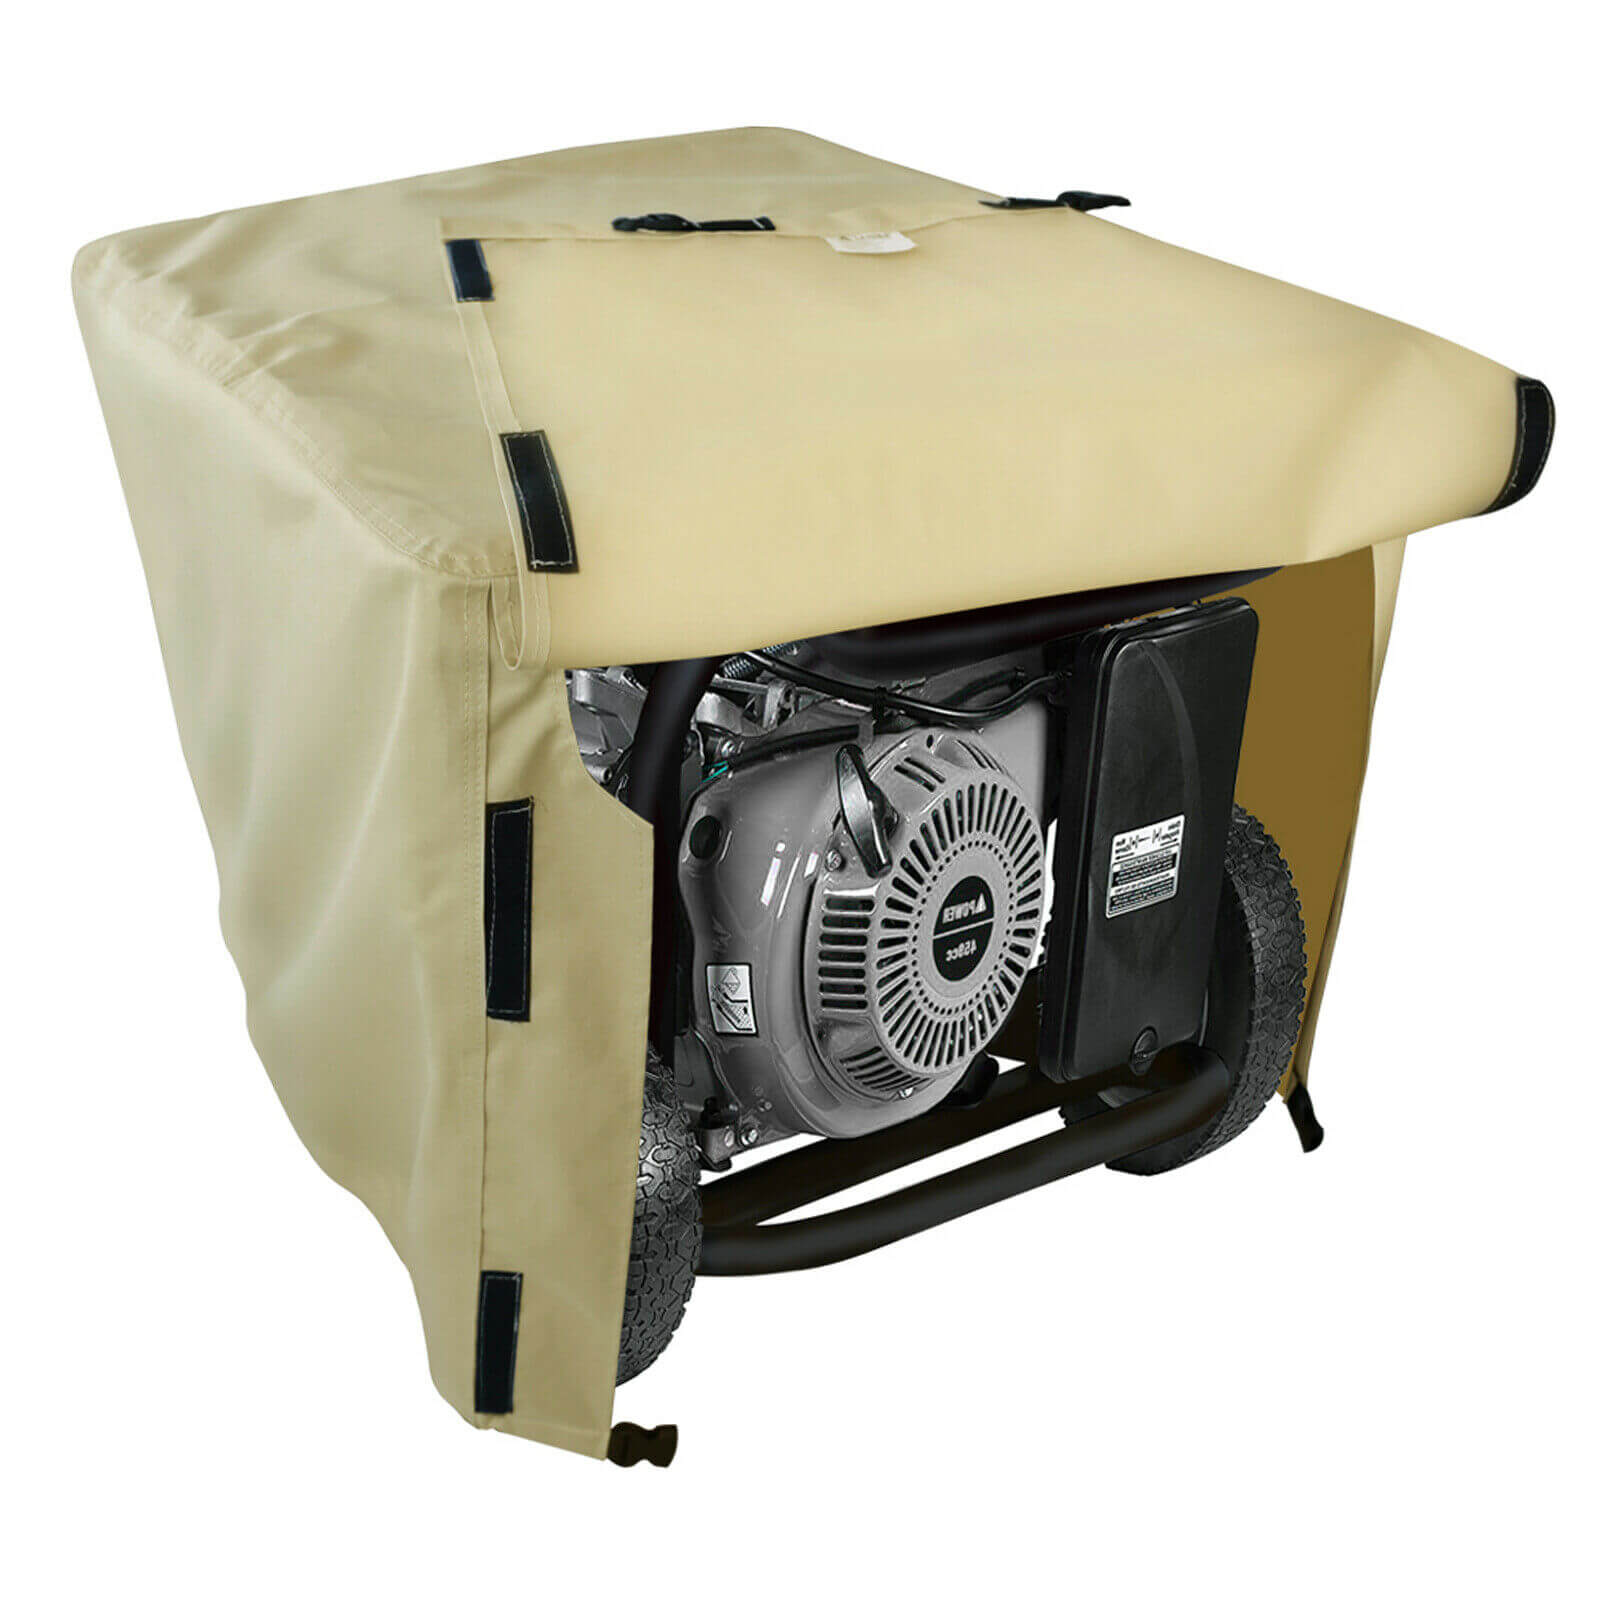 Display of 600D Waterproof Universal Generator Cover